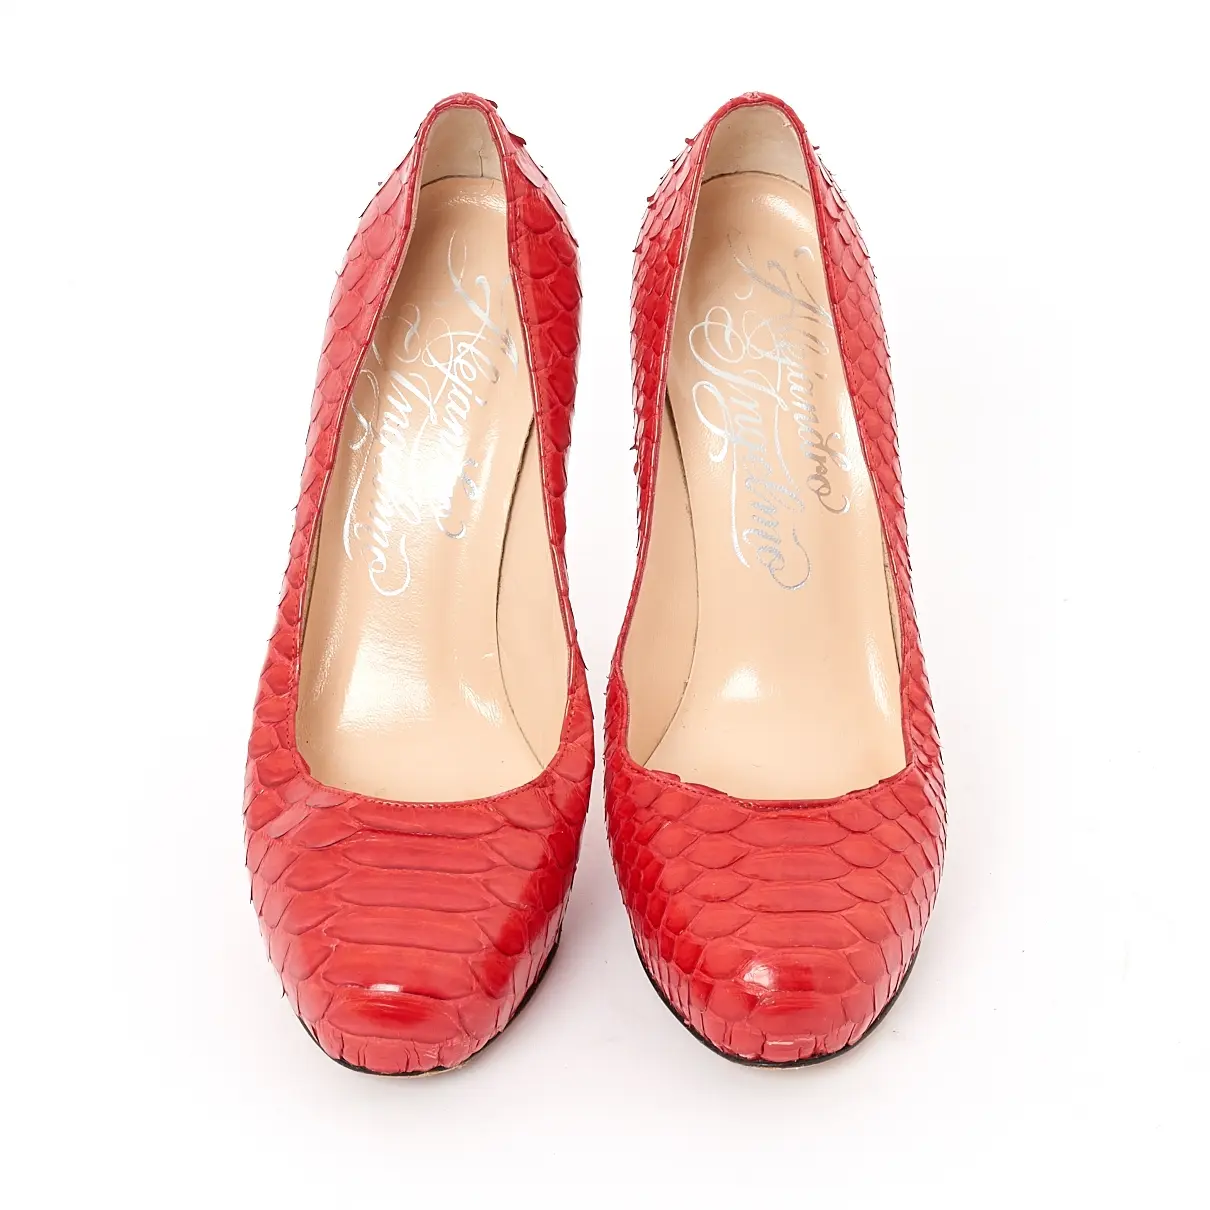 Buy Alejandro Ingelmo Leather heels online